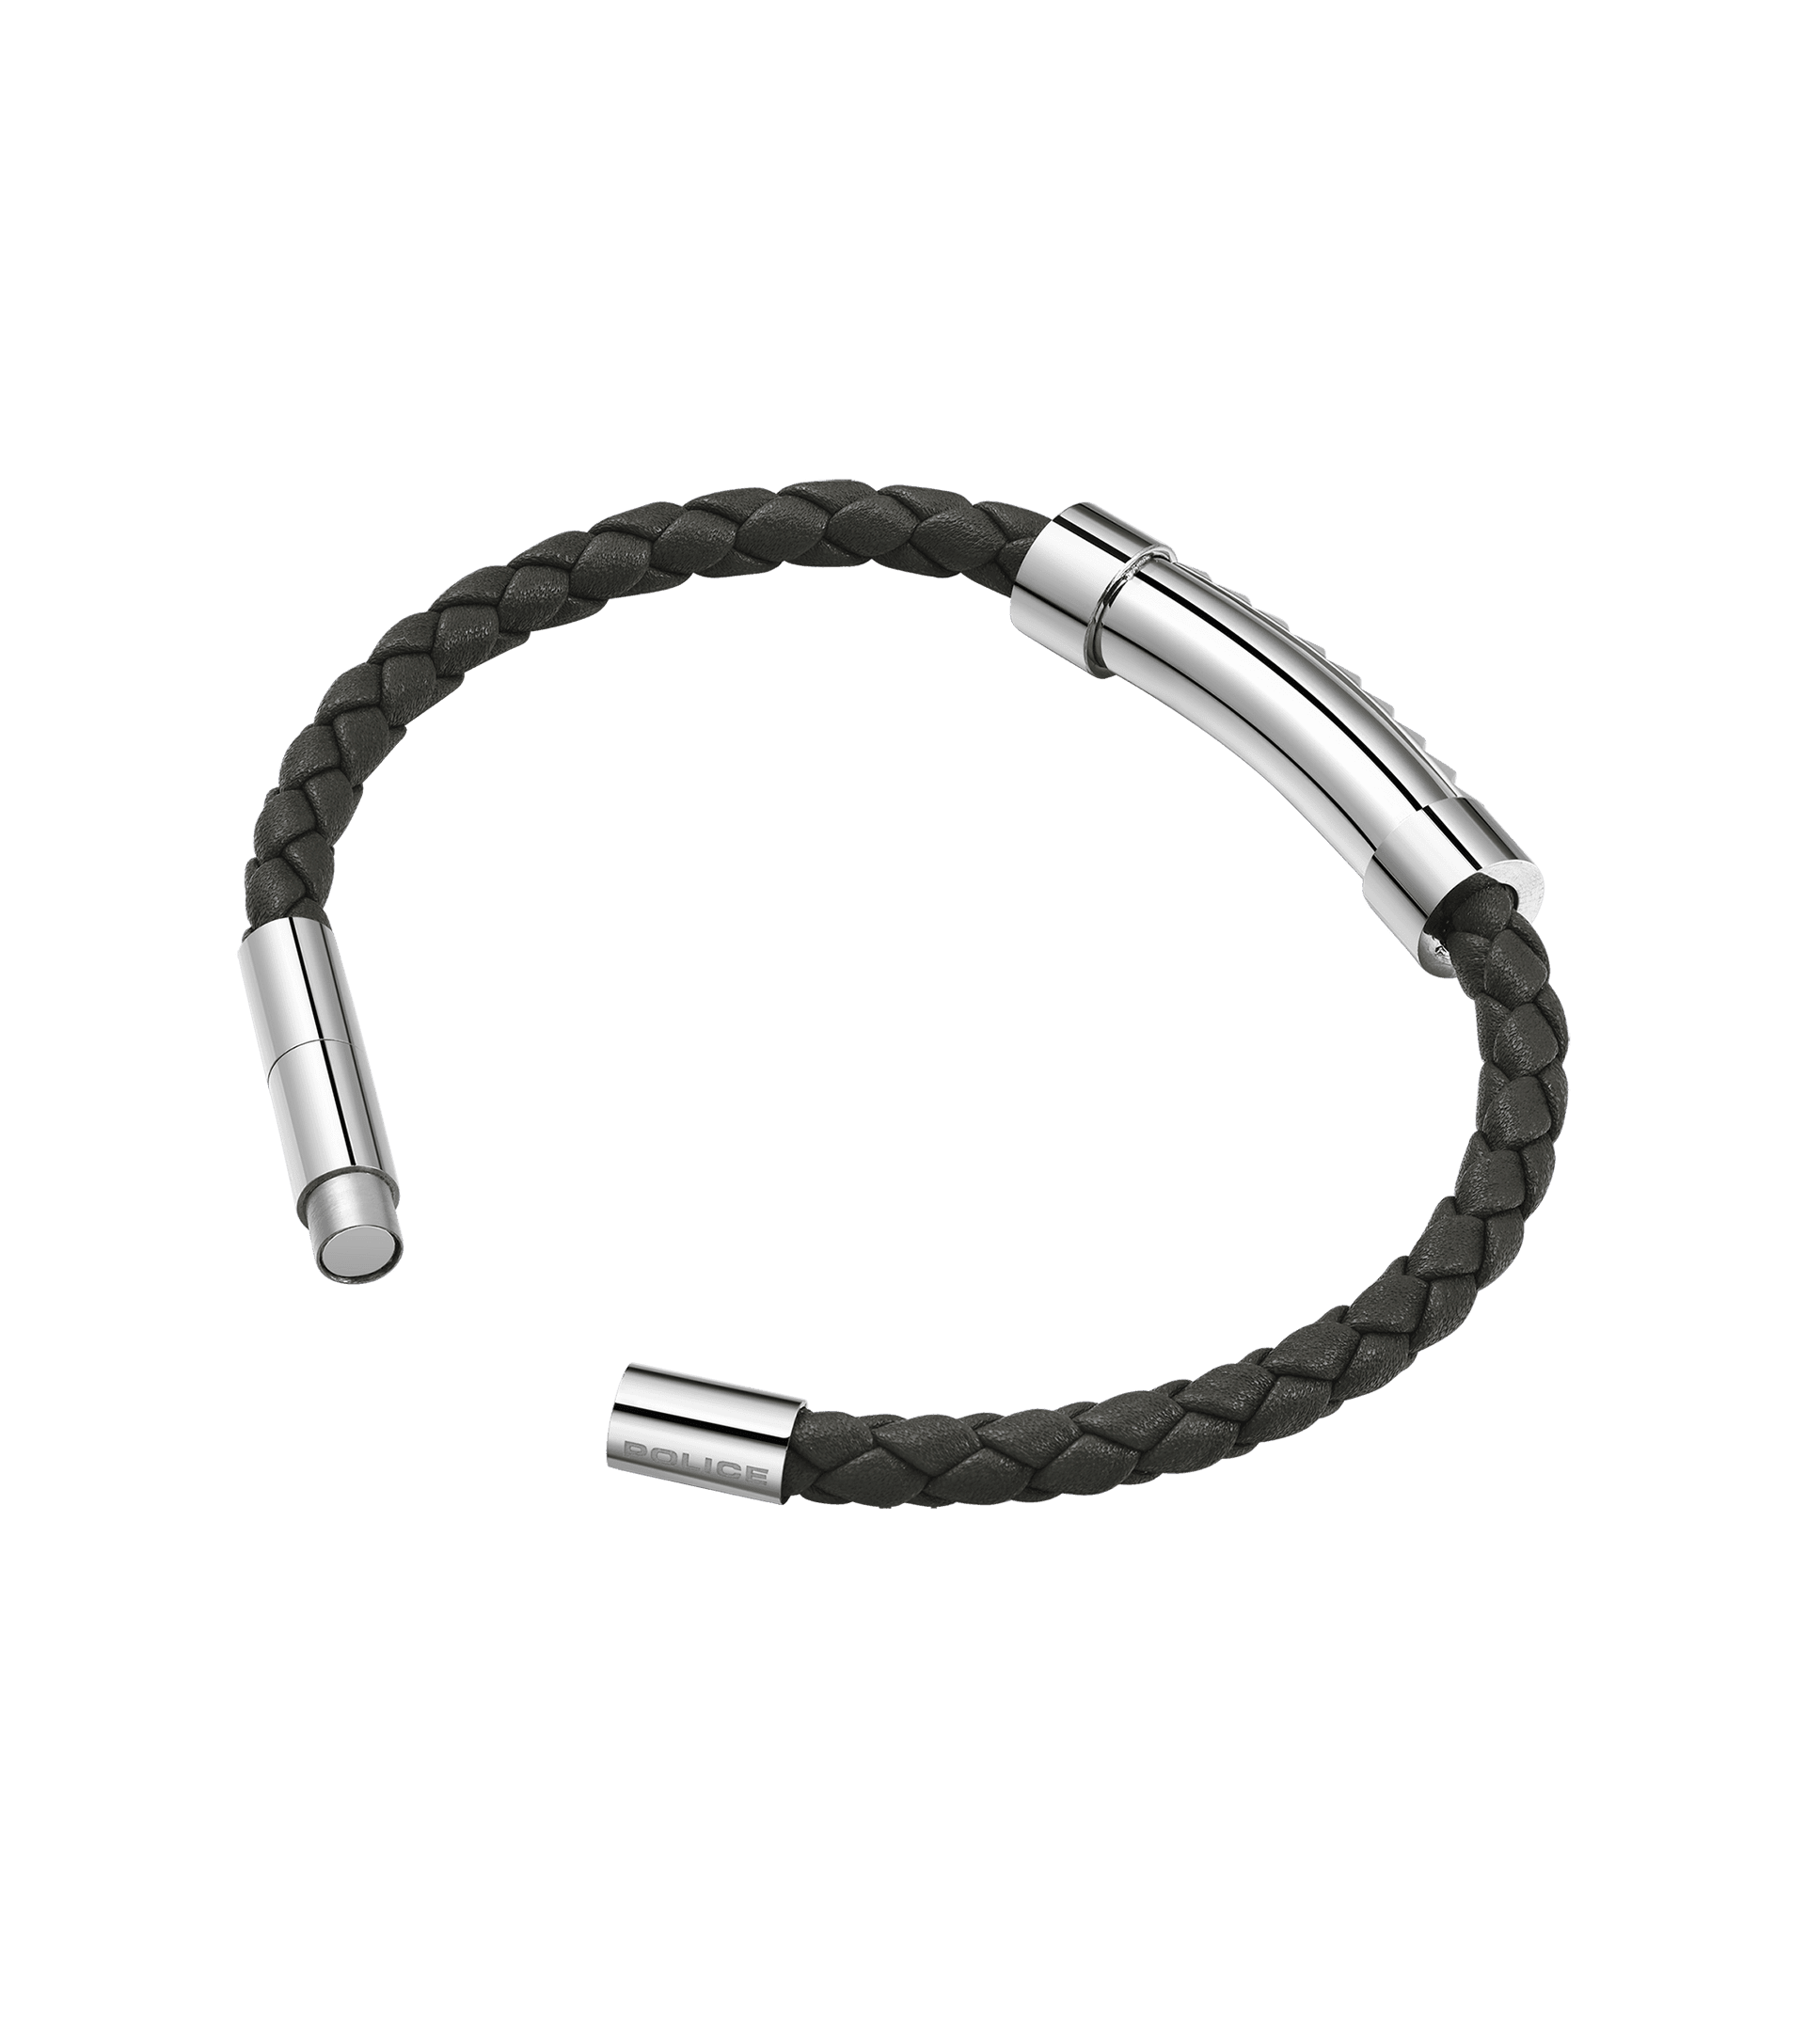 Police jewels - Geometric Metal Bracelet By Police For Men PEAGB0001416